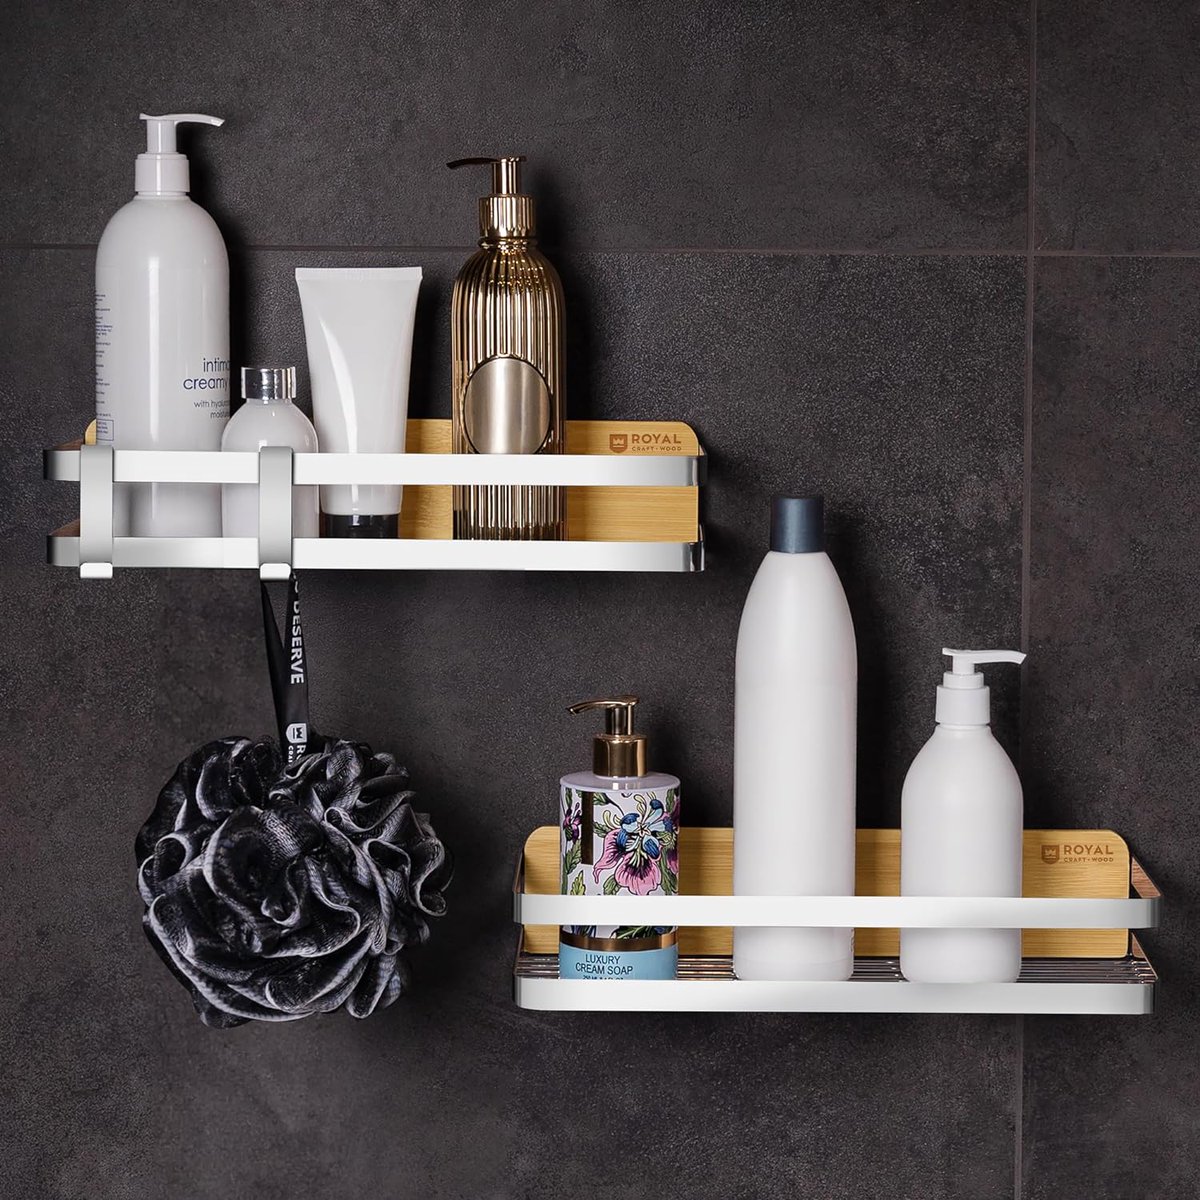 🚿 Keep Your Shower Tidy: Bathroom Shower Caddy Organizer & Bath Product - $32.97 💧

💰 Deal Price: $32.97  

🔗 amzn.to/4cx3nrP  

#BathroomEssentials #ShowerCaddy #OrganizationHelper #HomeOrganization